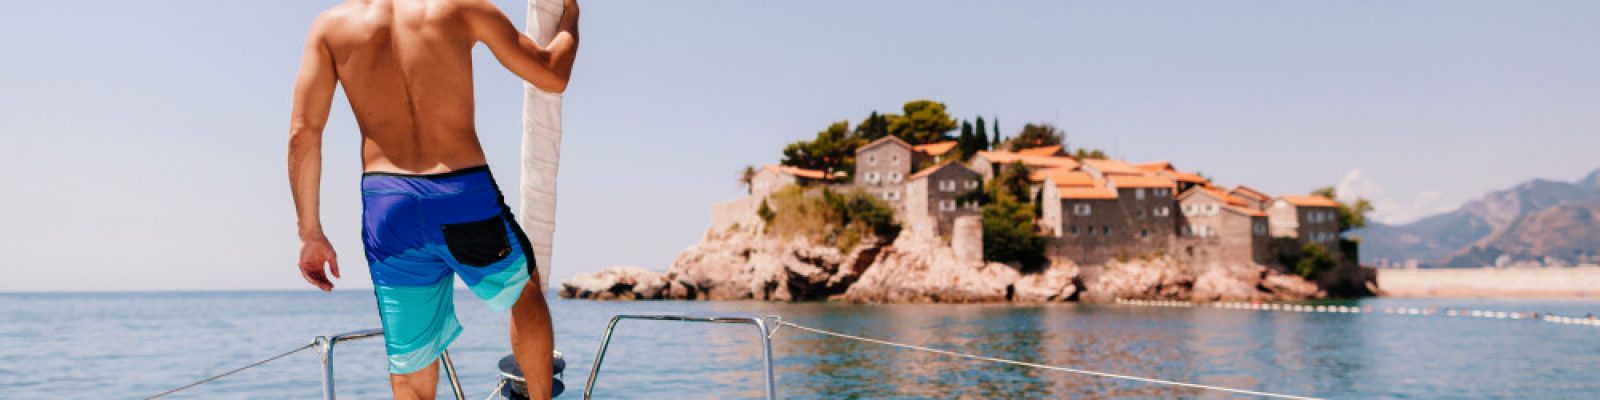 man yacht in europe. Luxury yacht in Montenegro